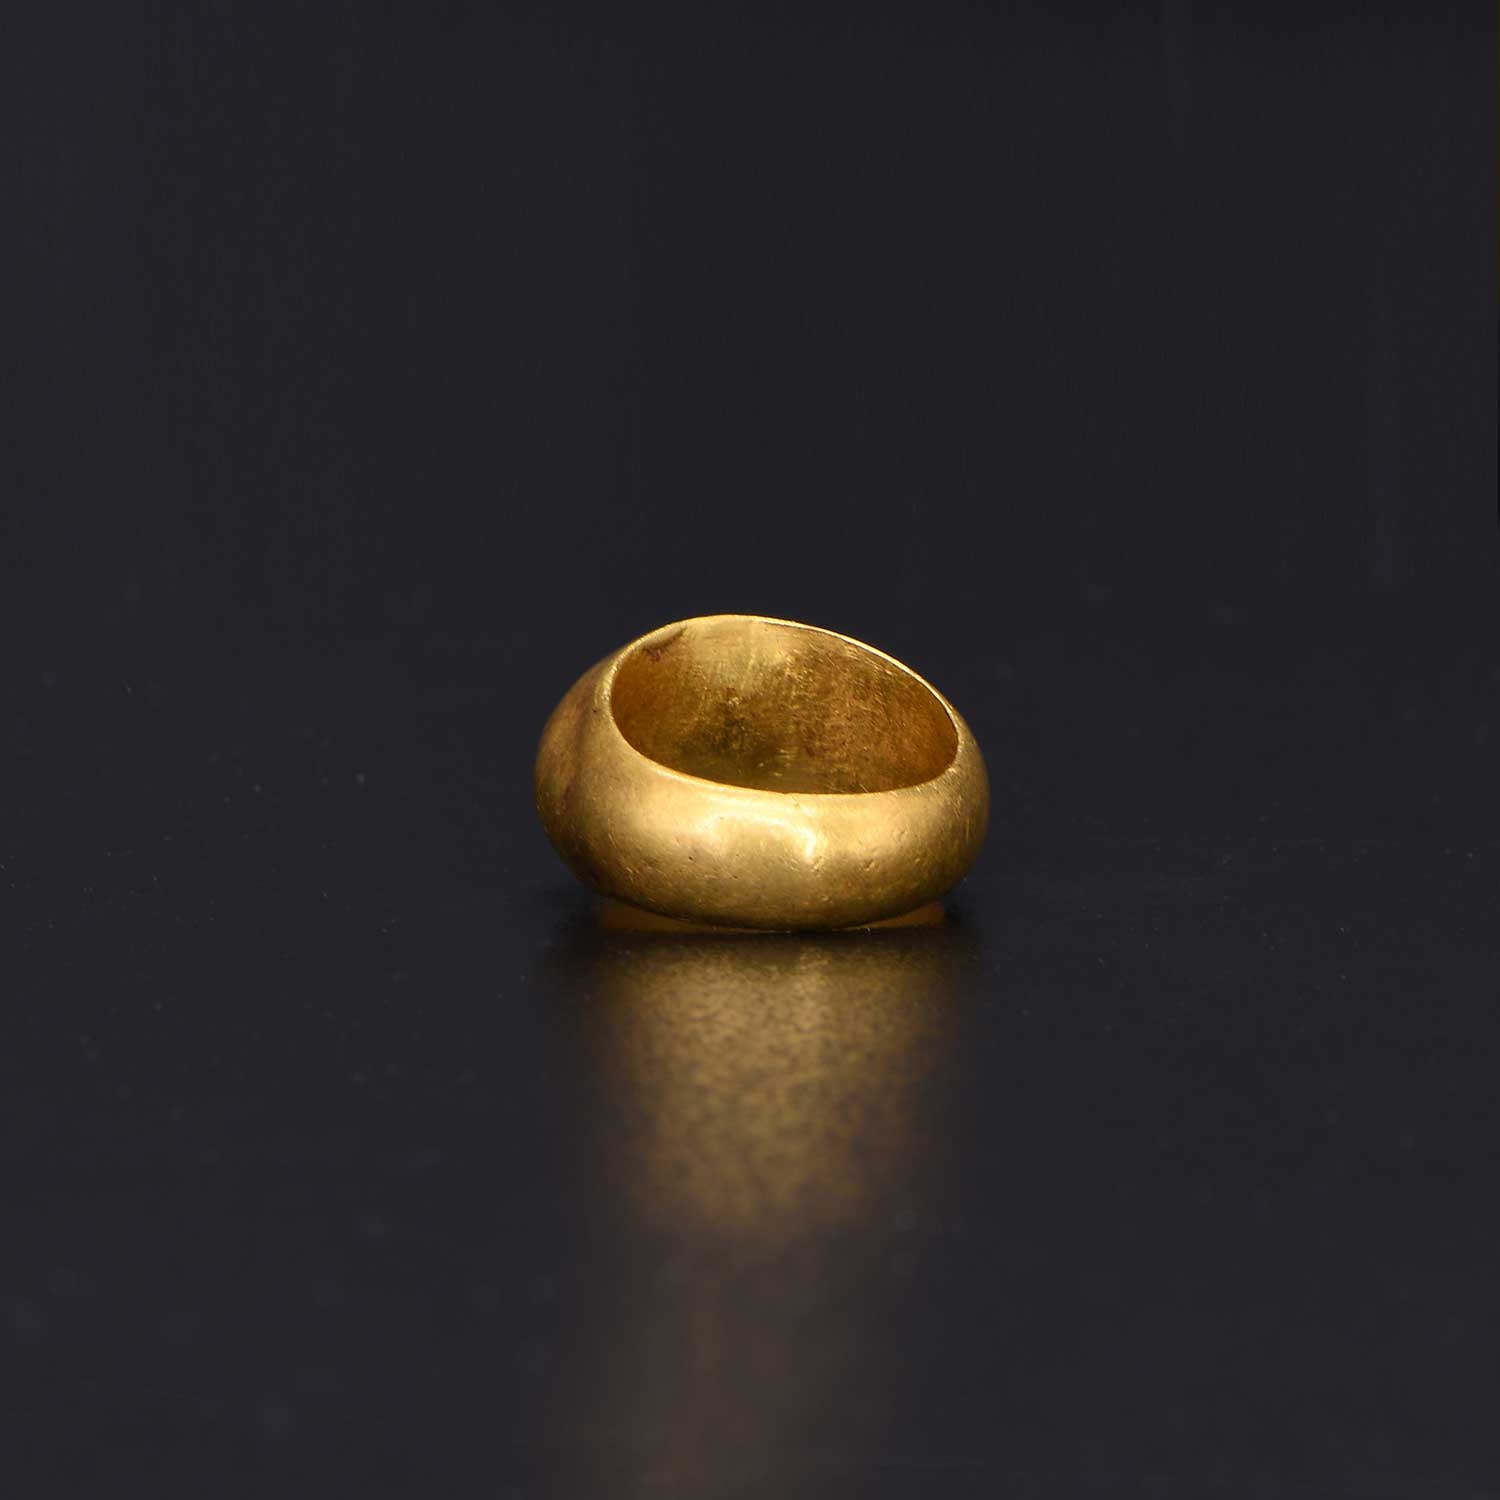 A Roman Gold Ring with Garnet Intaglio, Roman Imperial Period